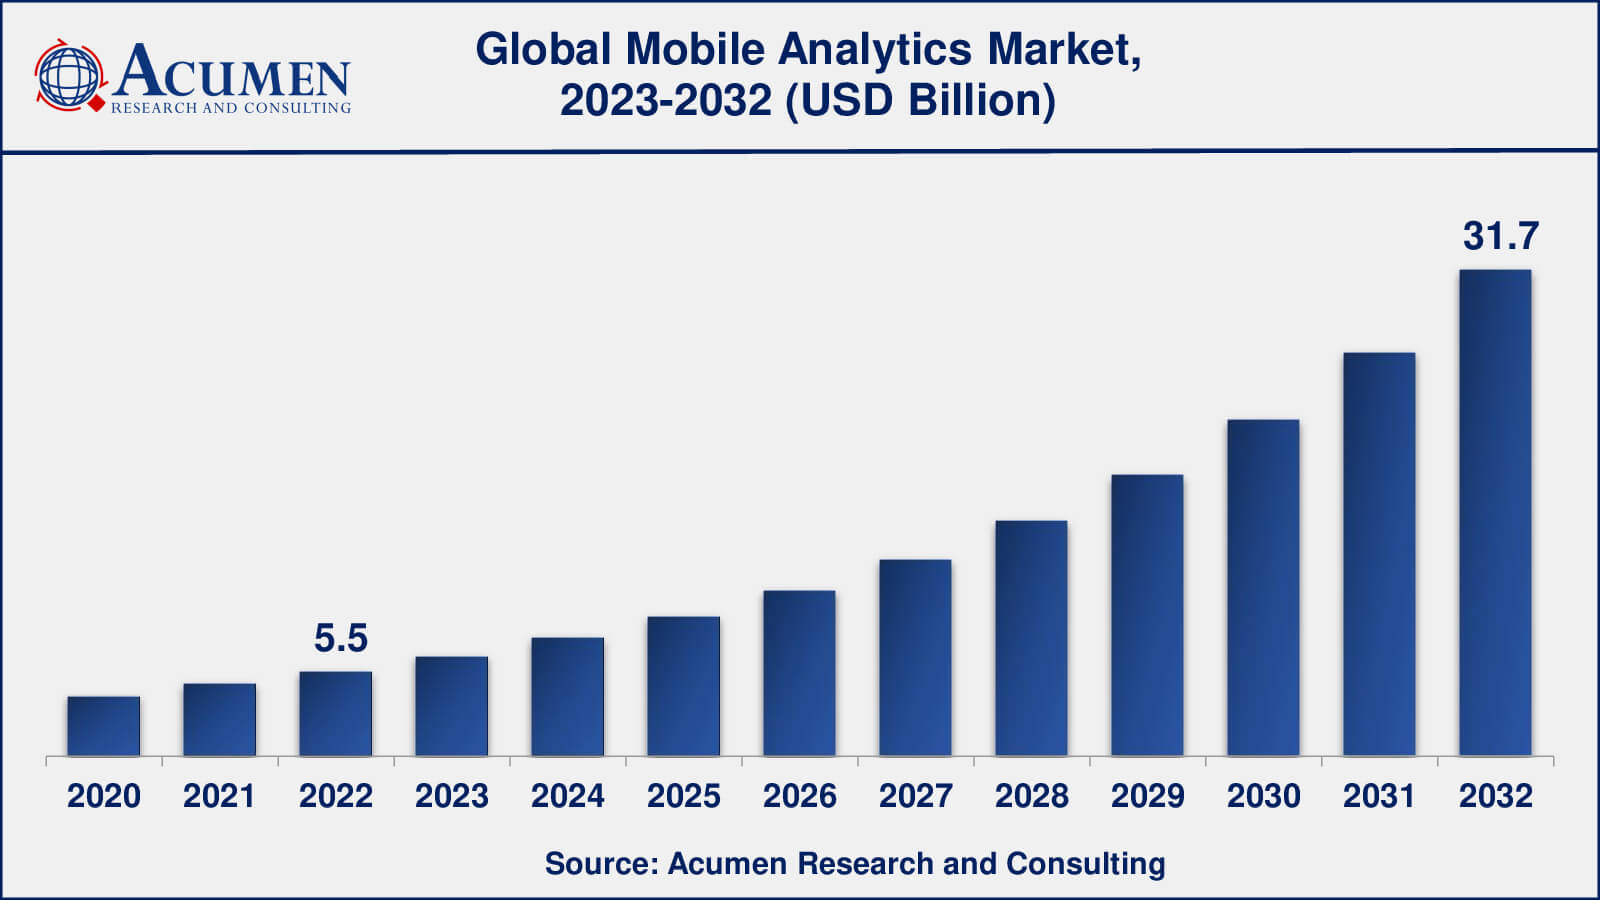 Global Mobile Analytics Market Dynamics